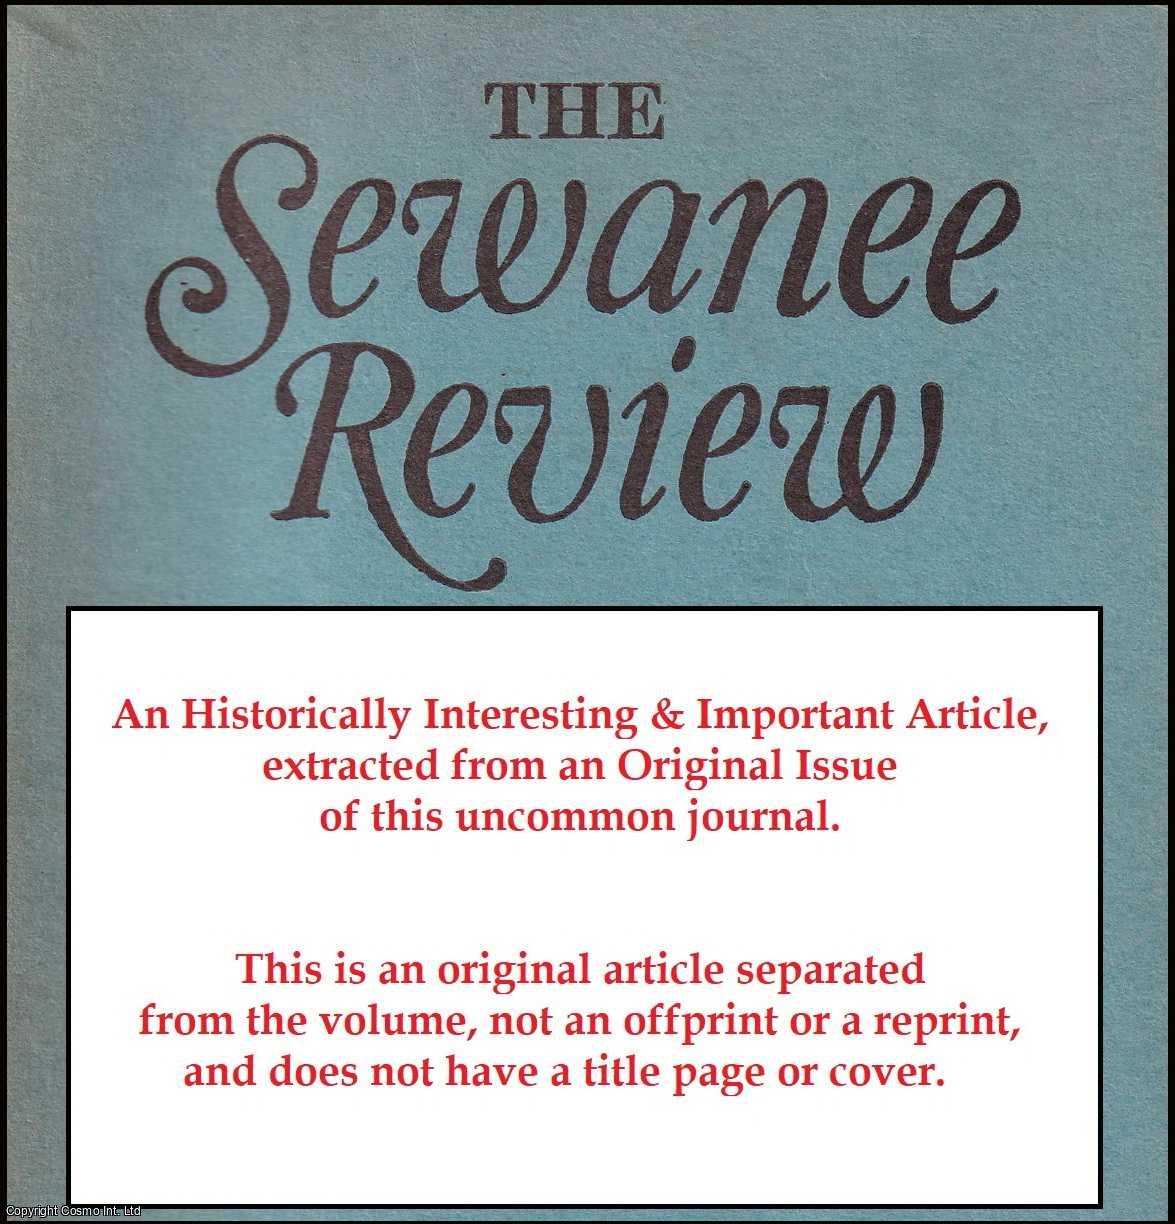 Ellington White - The Sergeant's Good Friend. An original article from The Sewanee Review, 1957.